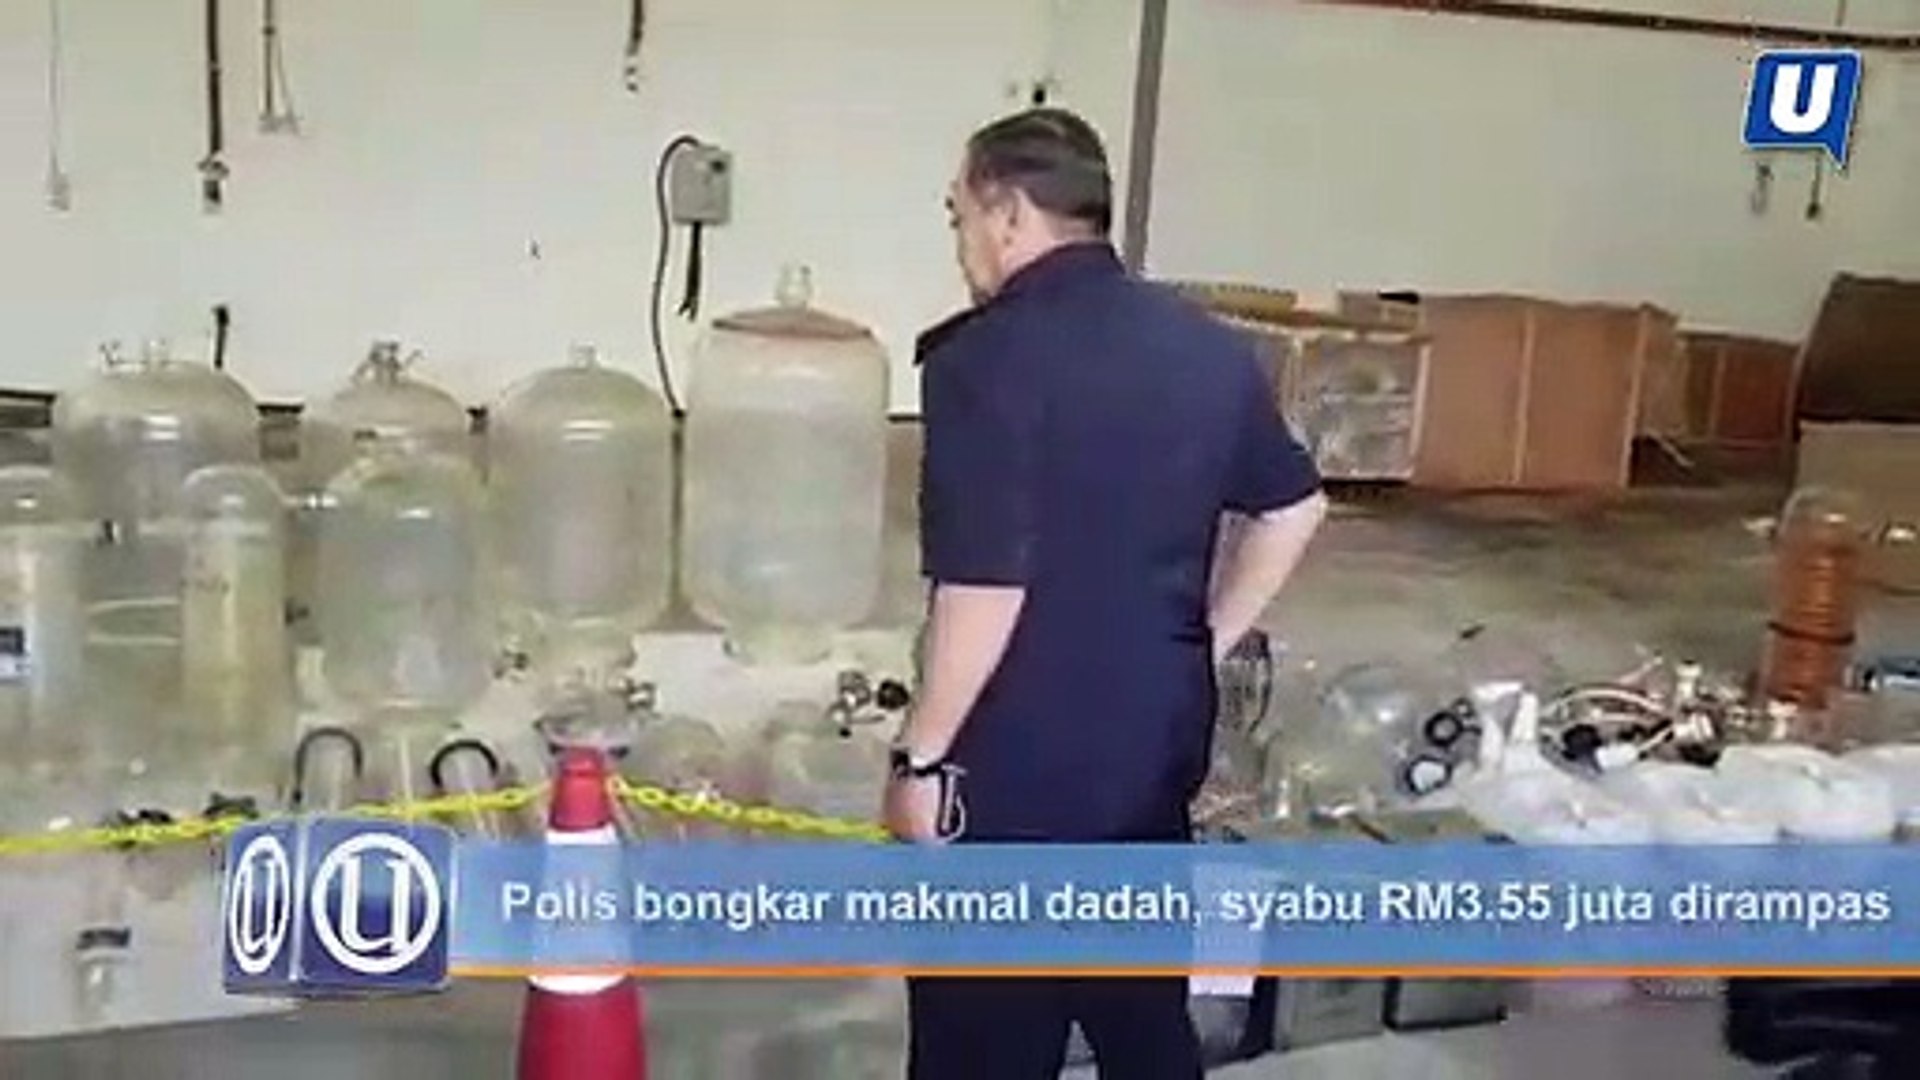 Polis bongkar makmal dadah, syabu RM3. juta dirampas